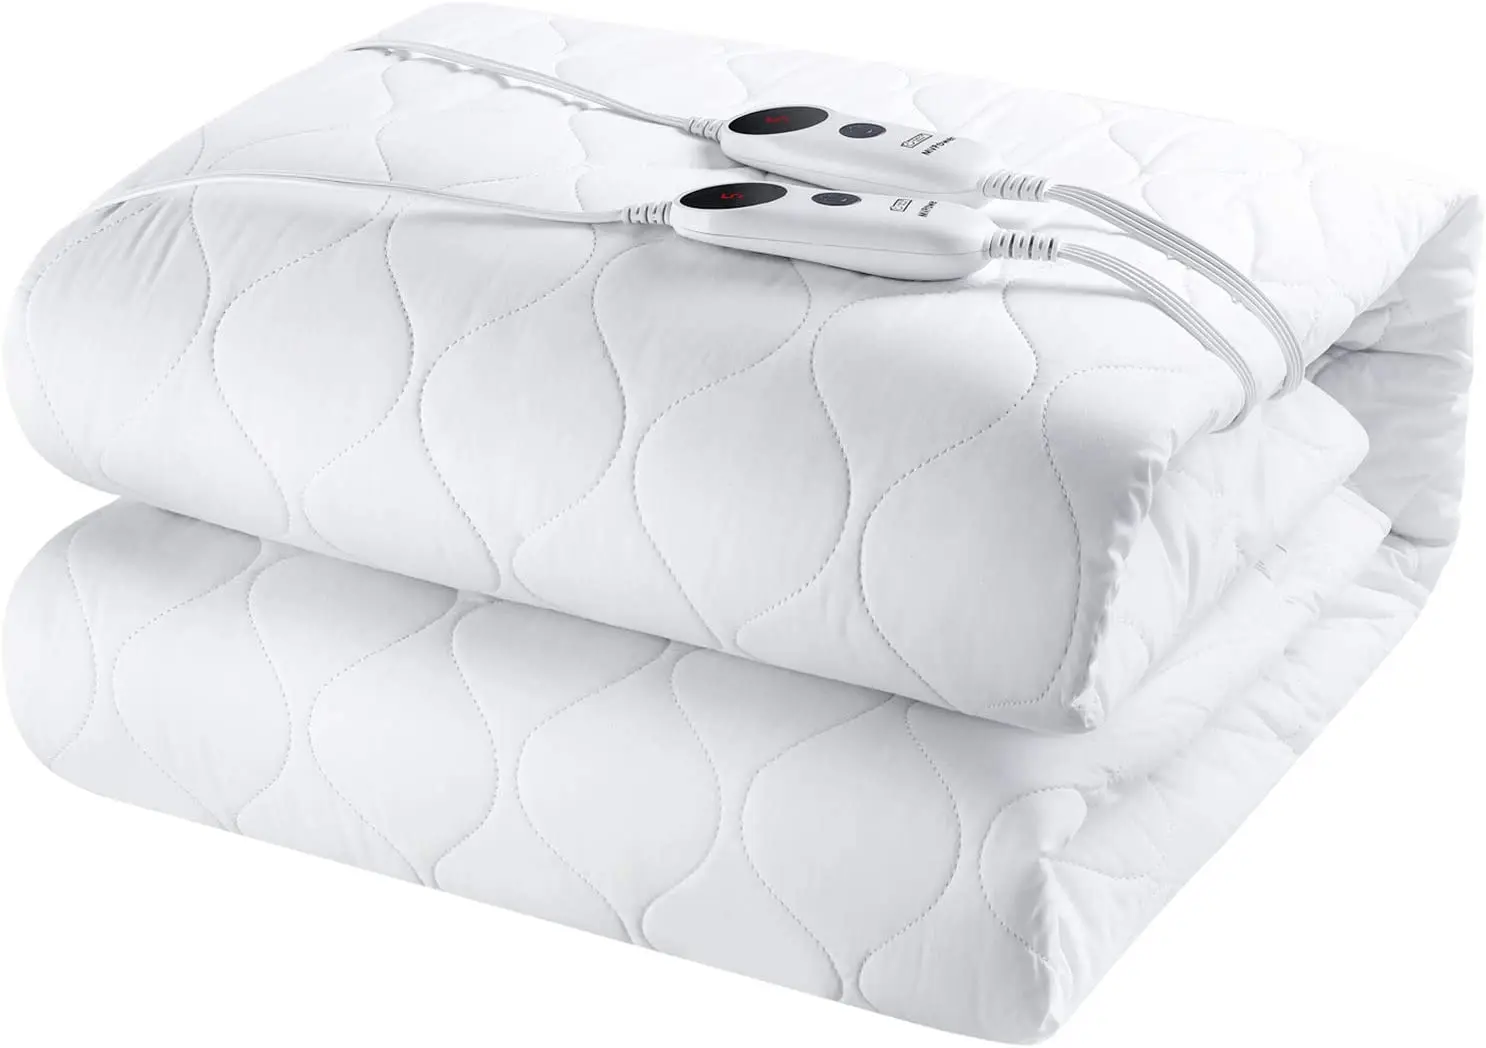 King Size heating mattress pad, heat mattress cover, Dual Co